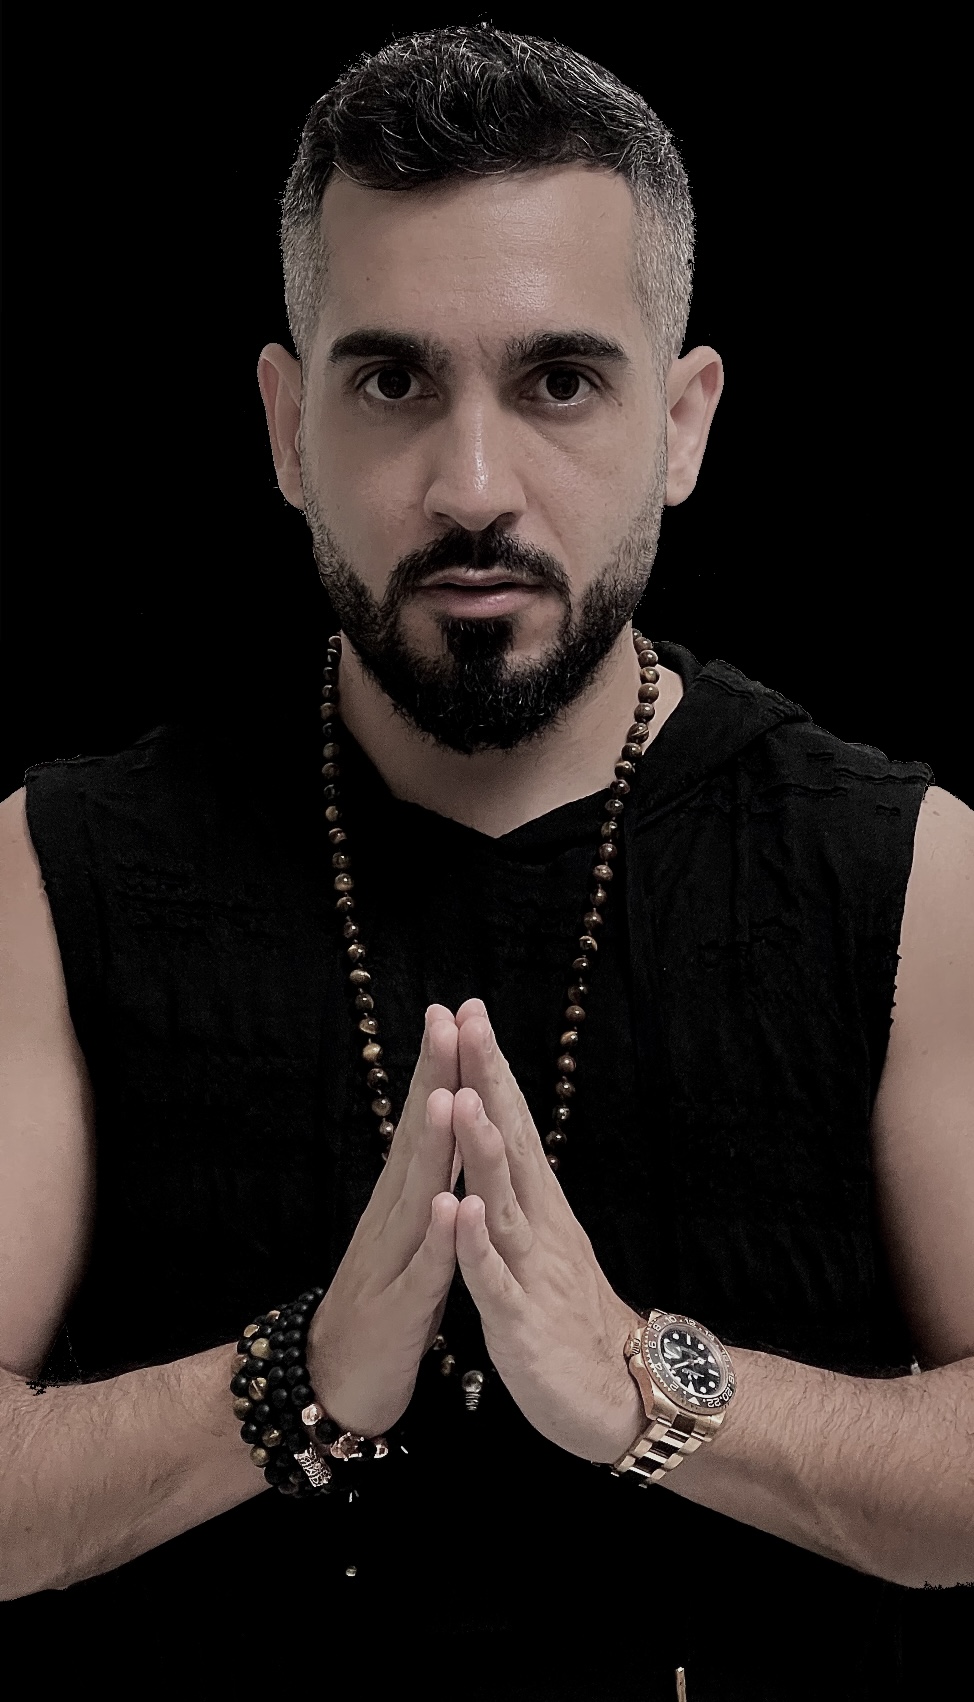 Ethno Music Composer Becomes a DJ Spotlight on Adam Benchaya “The Bee”